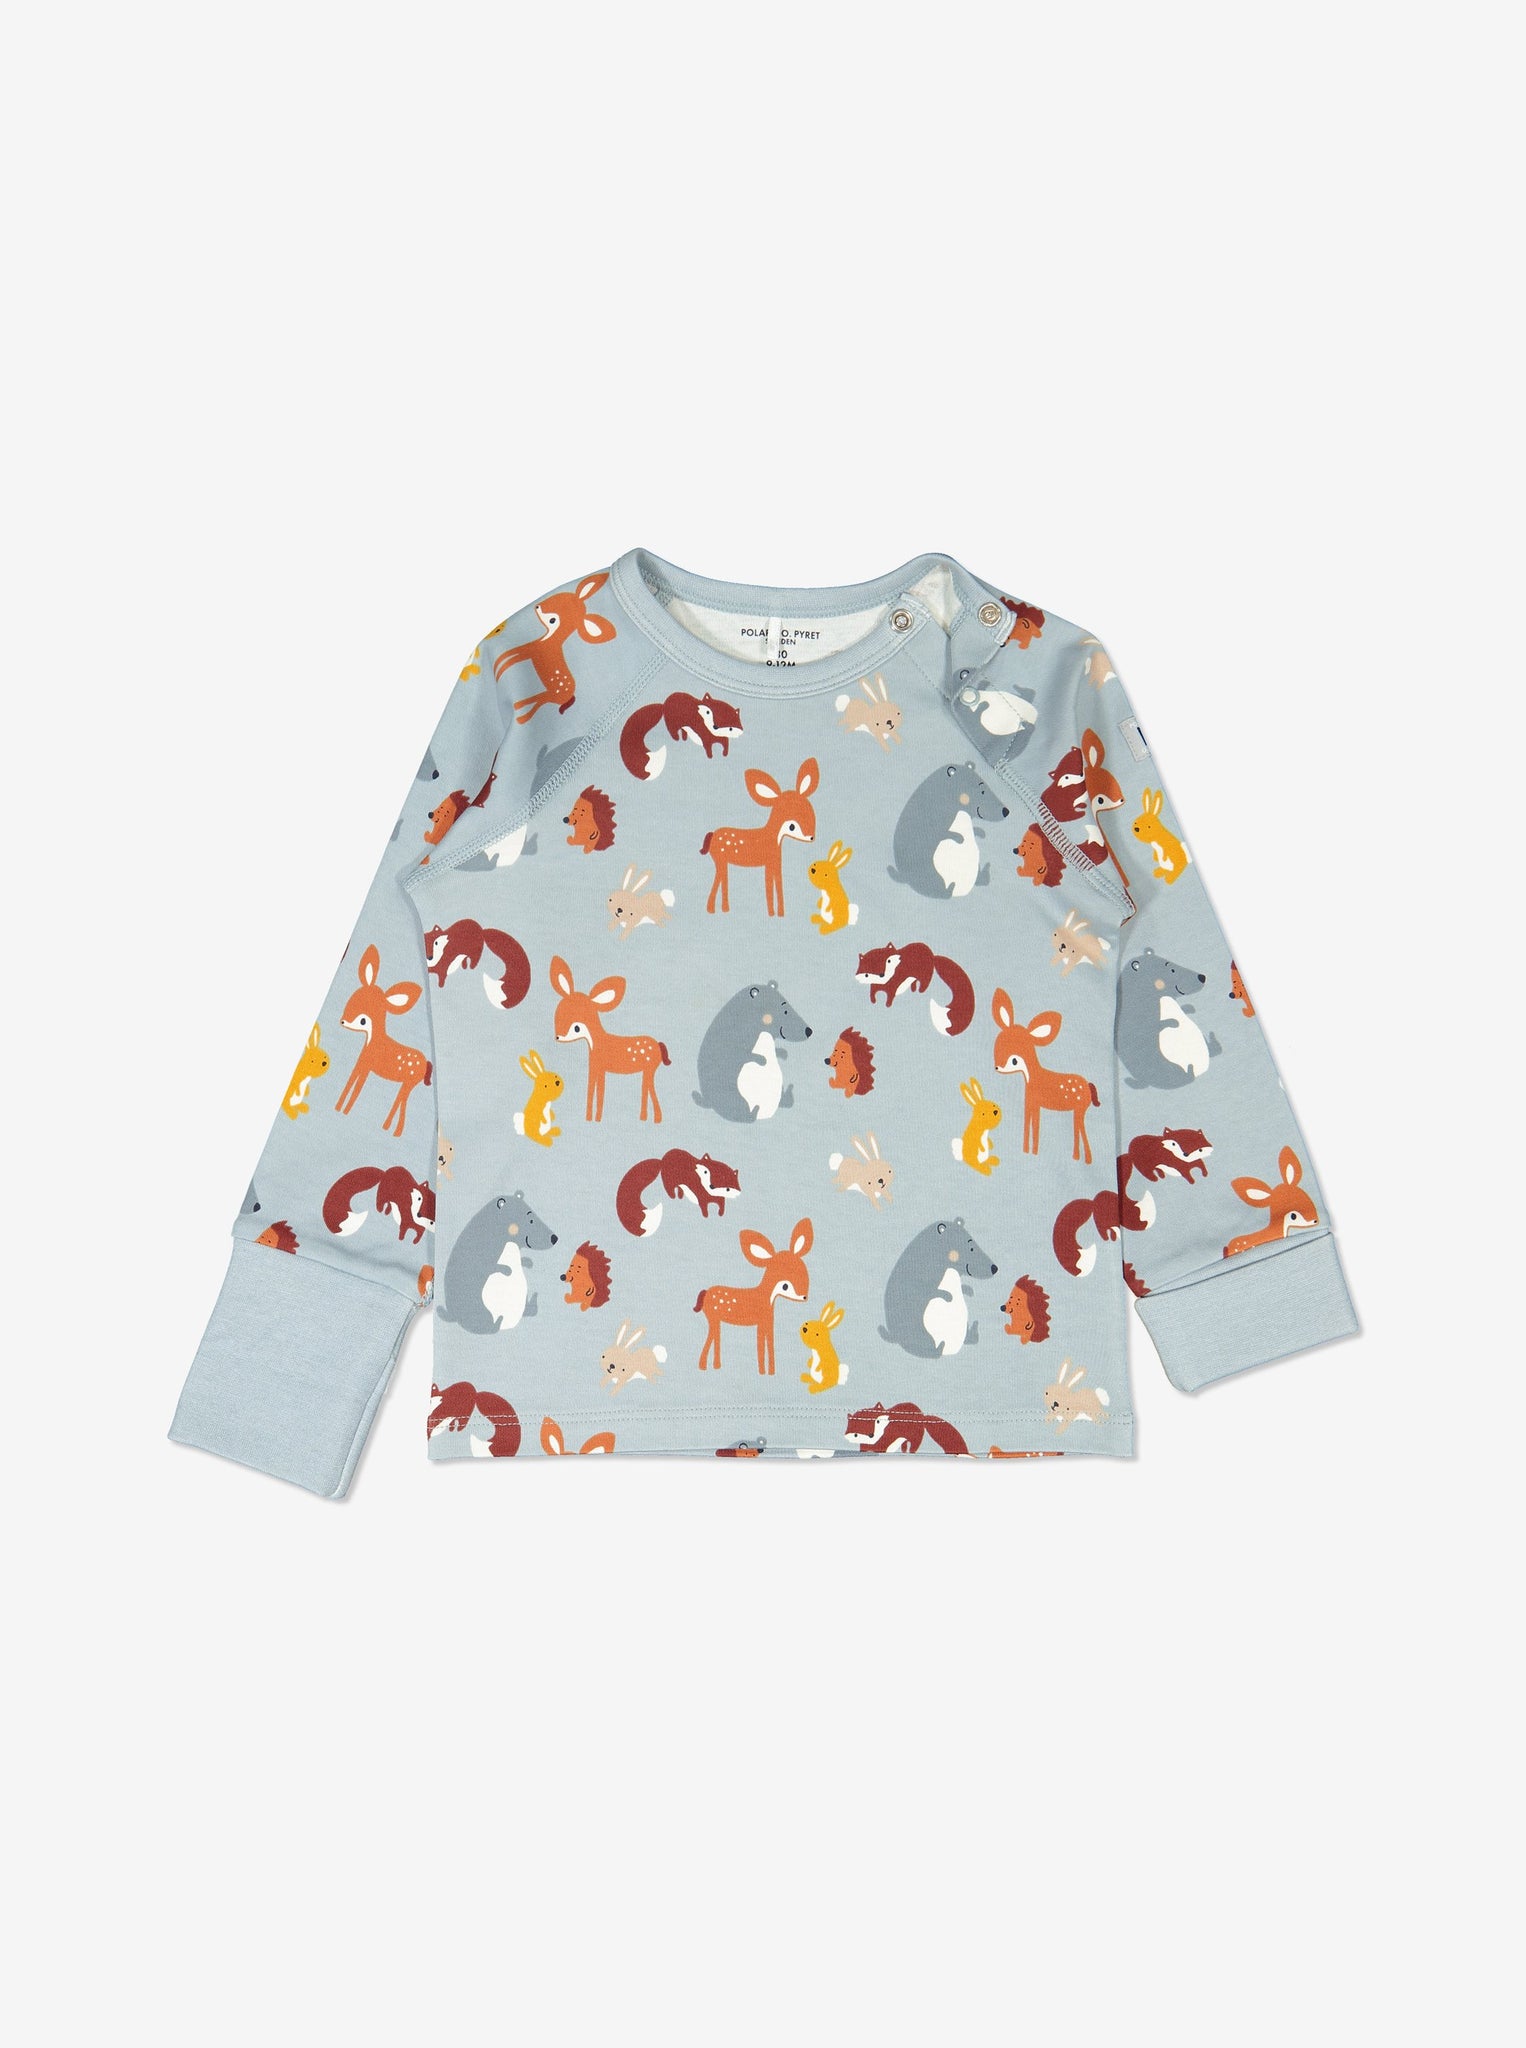 Animal Print Baby Top, Unisex Baby Clothes| Polarn O. Pyret UK